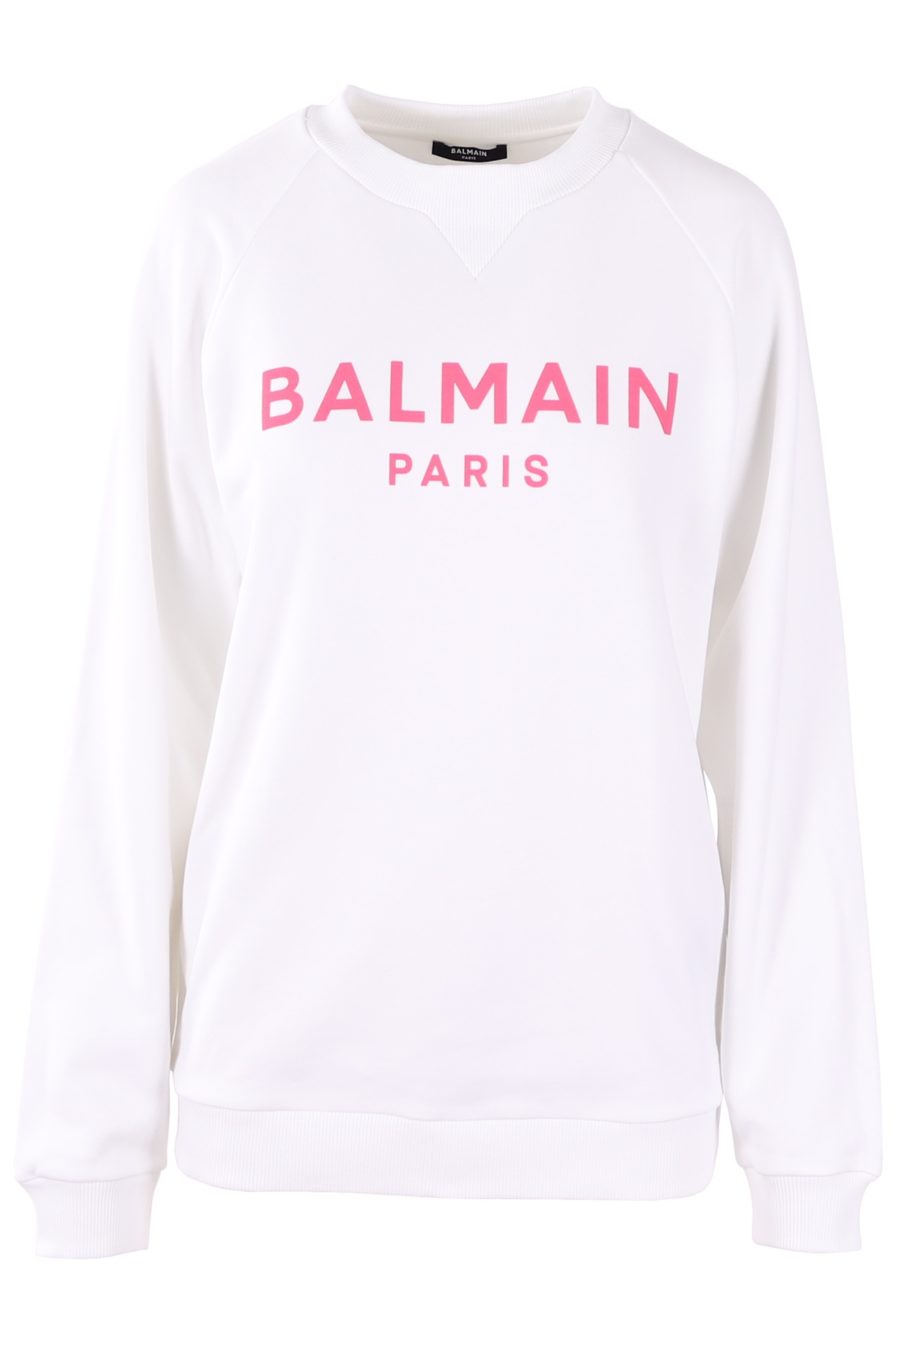 Sweatshirt Balmain white with pink logo print - 0fab92ca1f938424b2c2be4074803ca78bbb054d